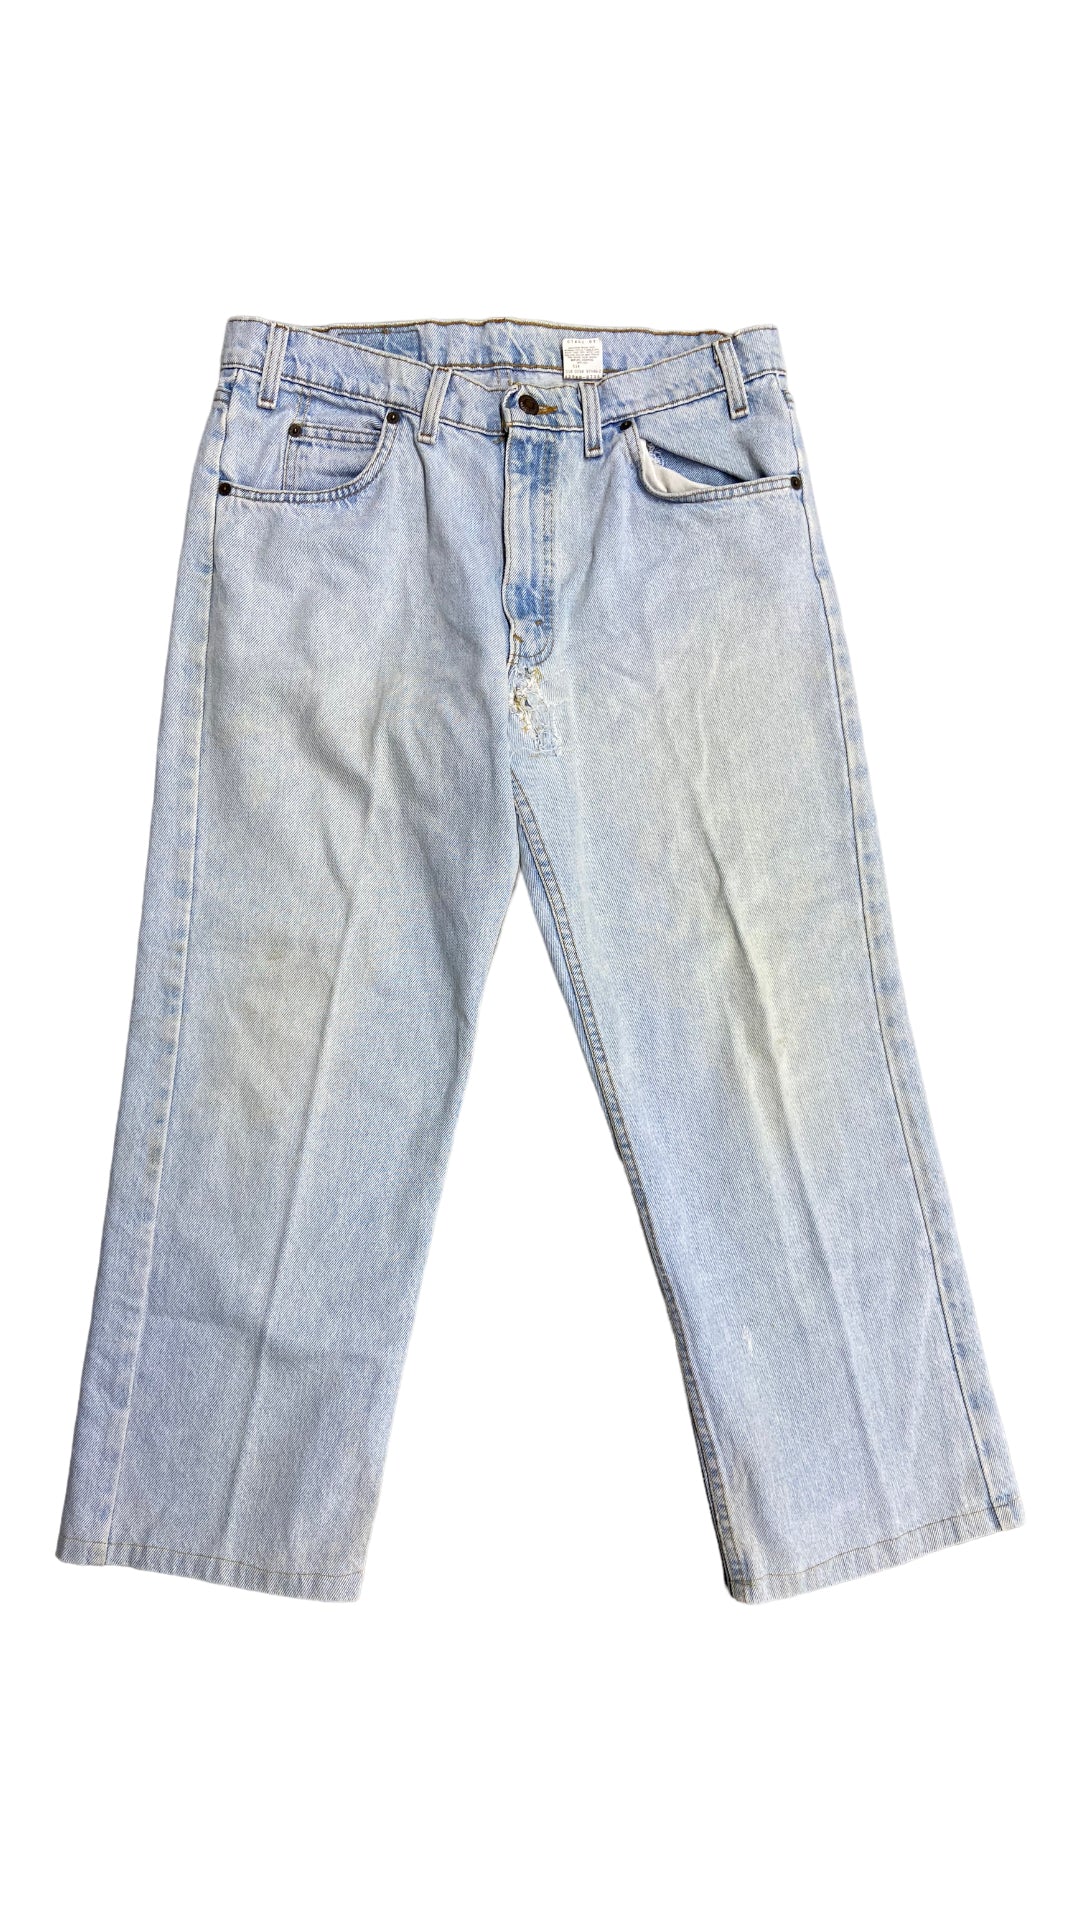 VTG Levi's Orange Tab Lightwash Jeans Sz 35x27